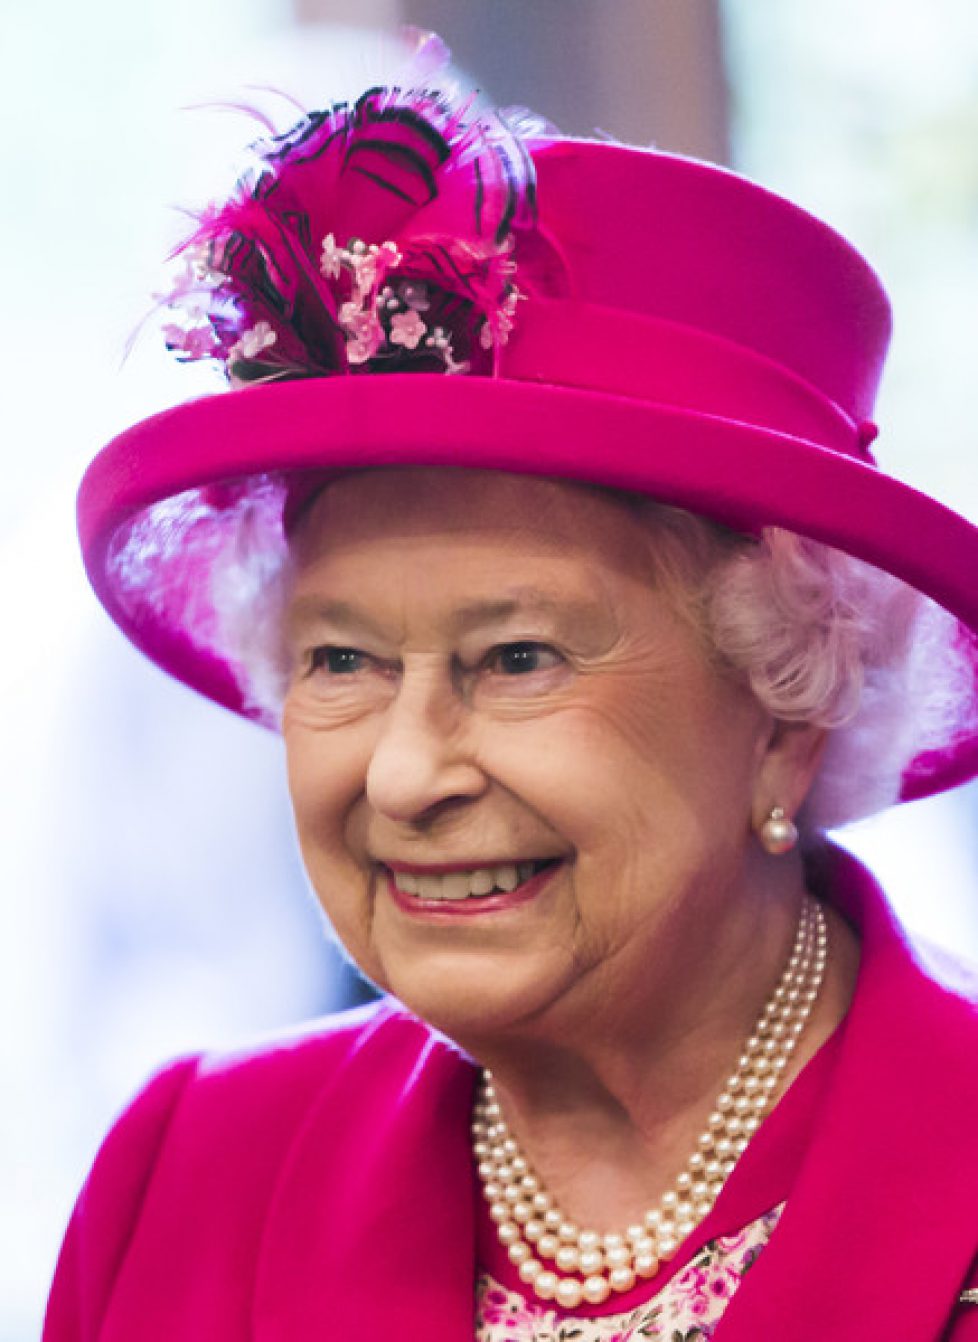 Queen+Elizabeth+II+Visits+Royal+Auxiliary+5lKm0f6WRjQl